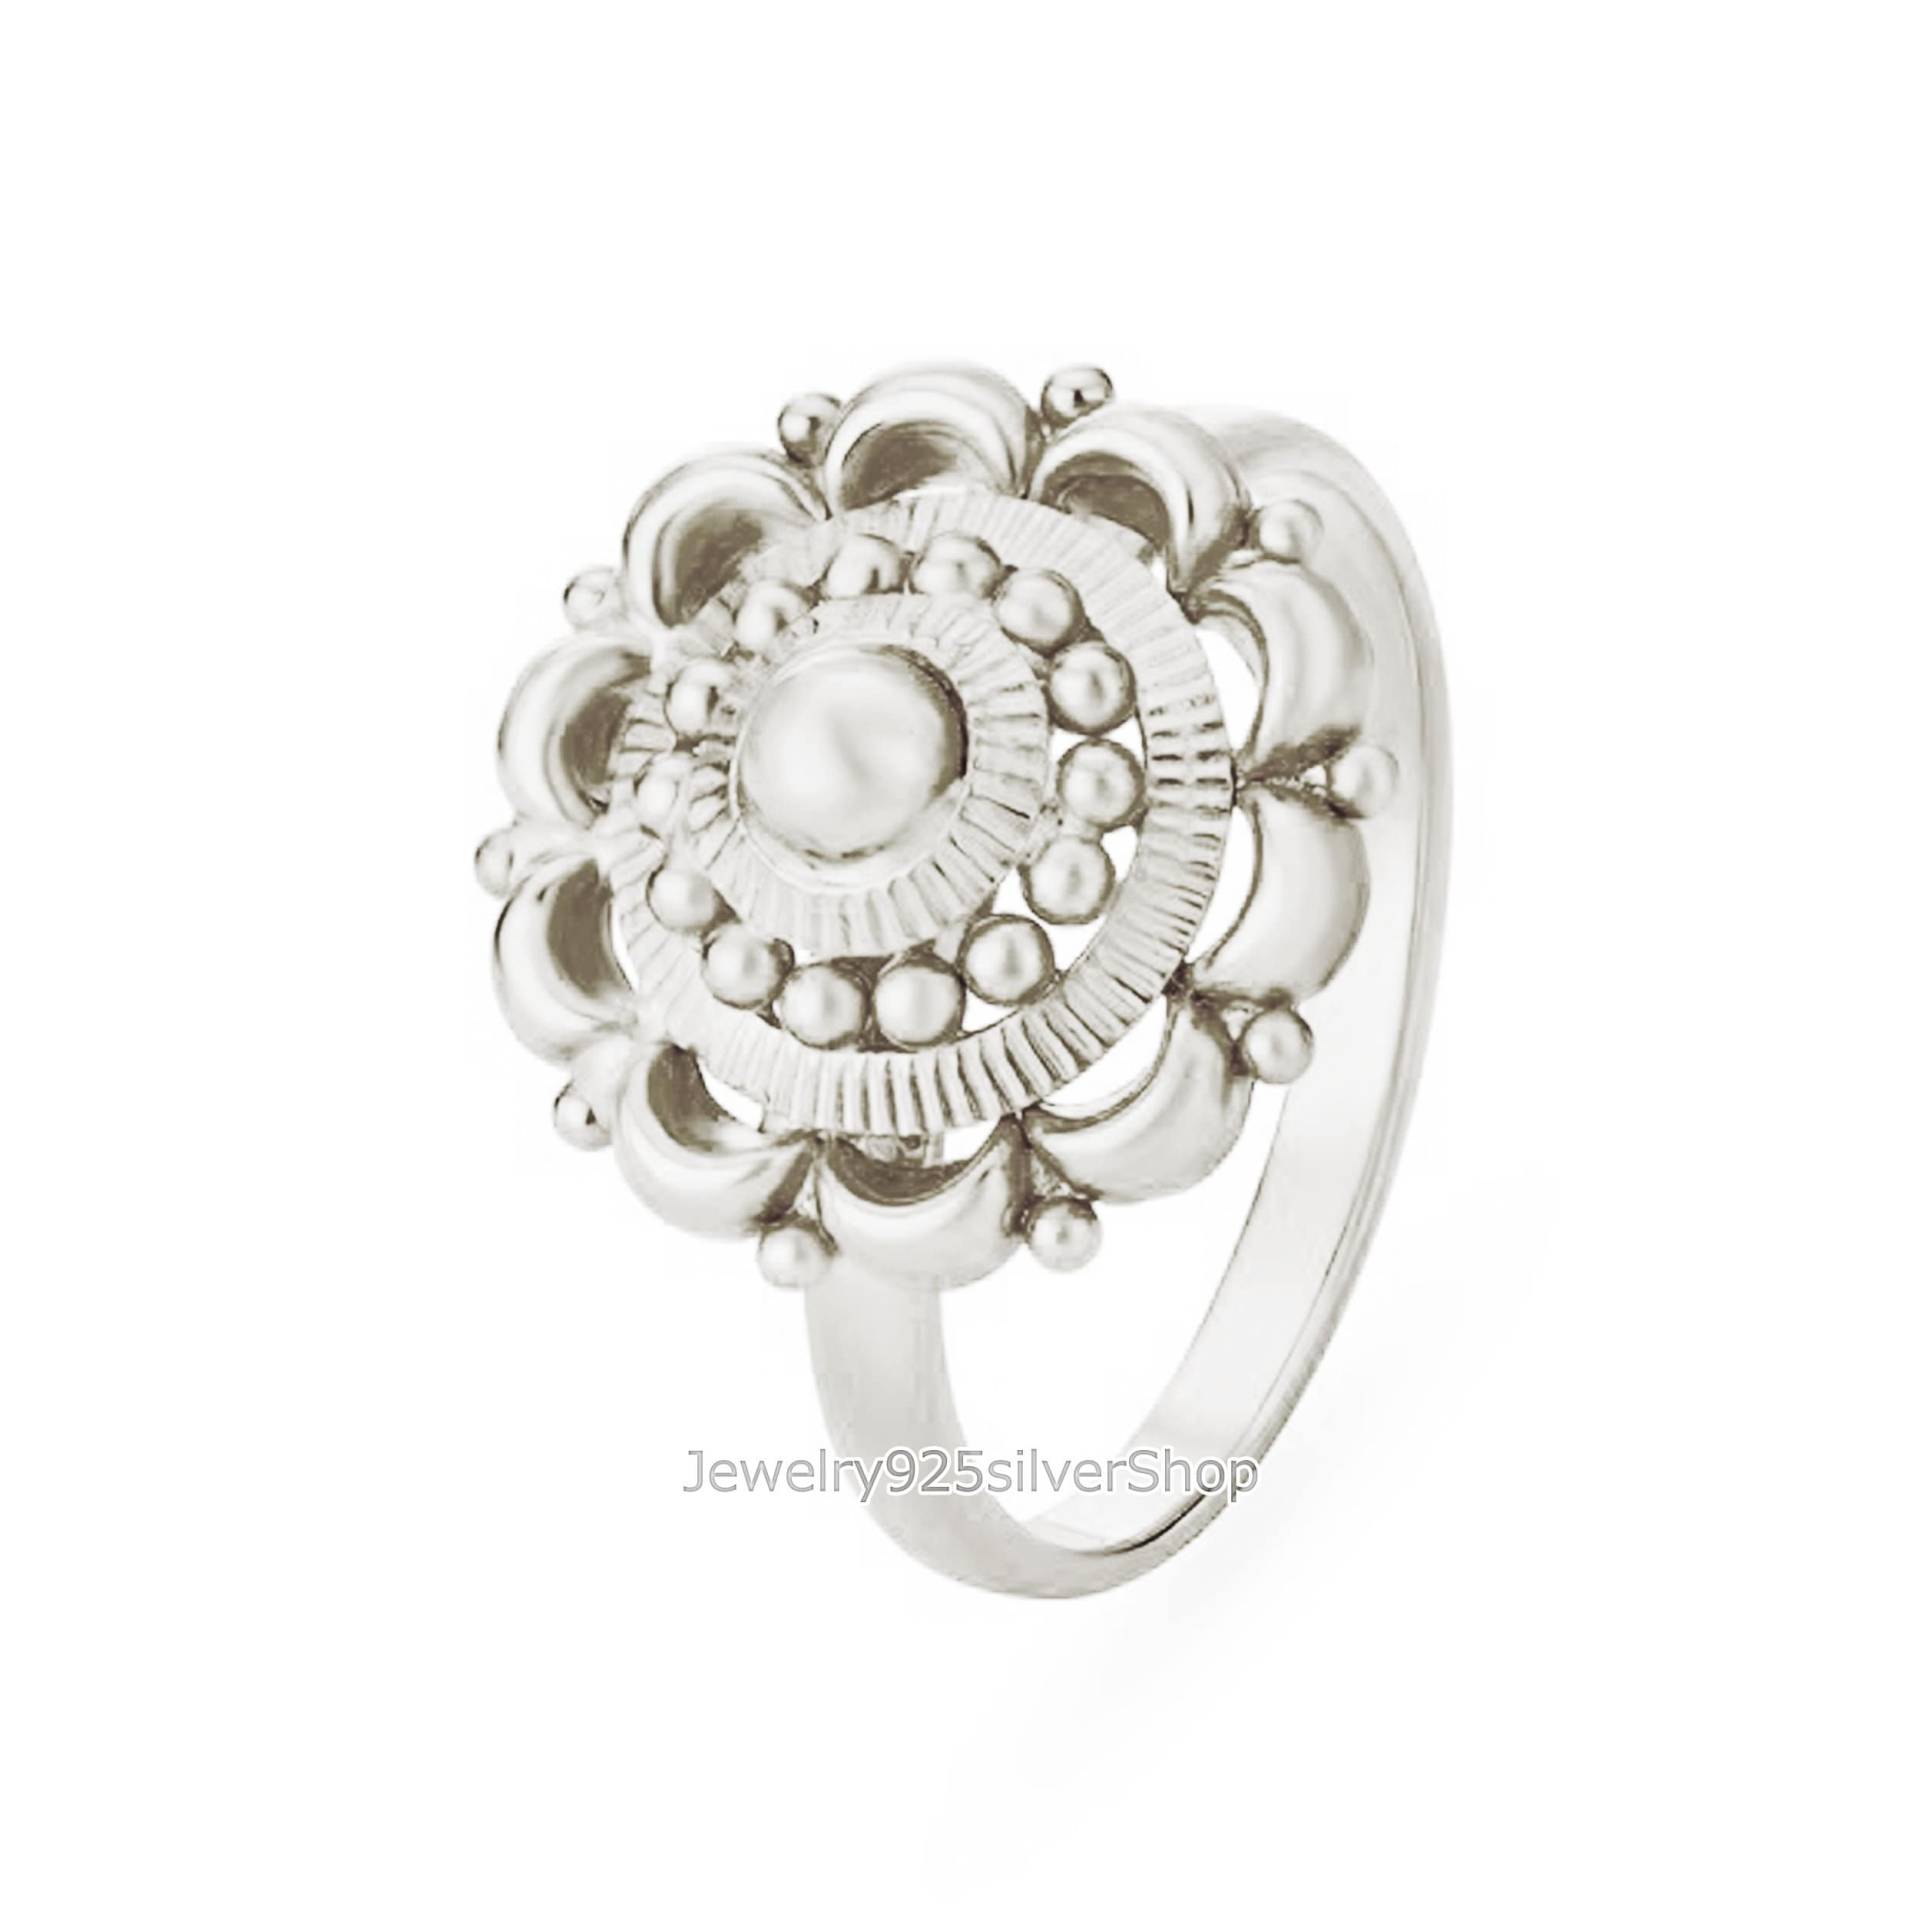 Floral Finger Ring, Traditioneller Handgemachter 925 Sterling Silber Vintage-Stil Frauen Ring von Jewelry925silverShop